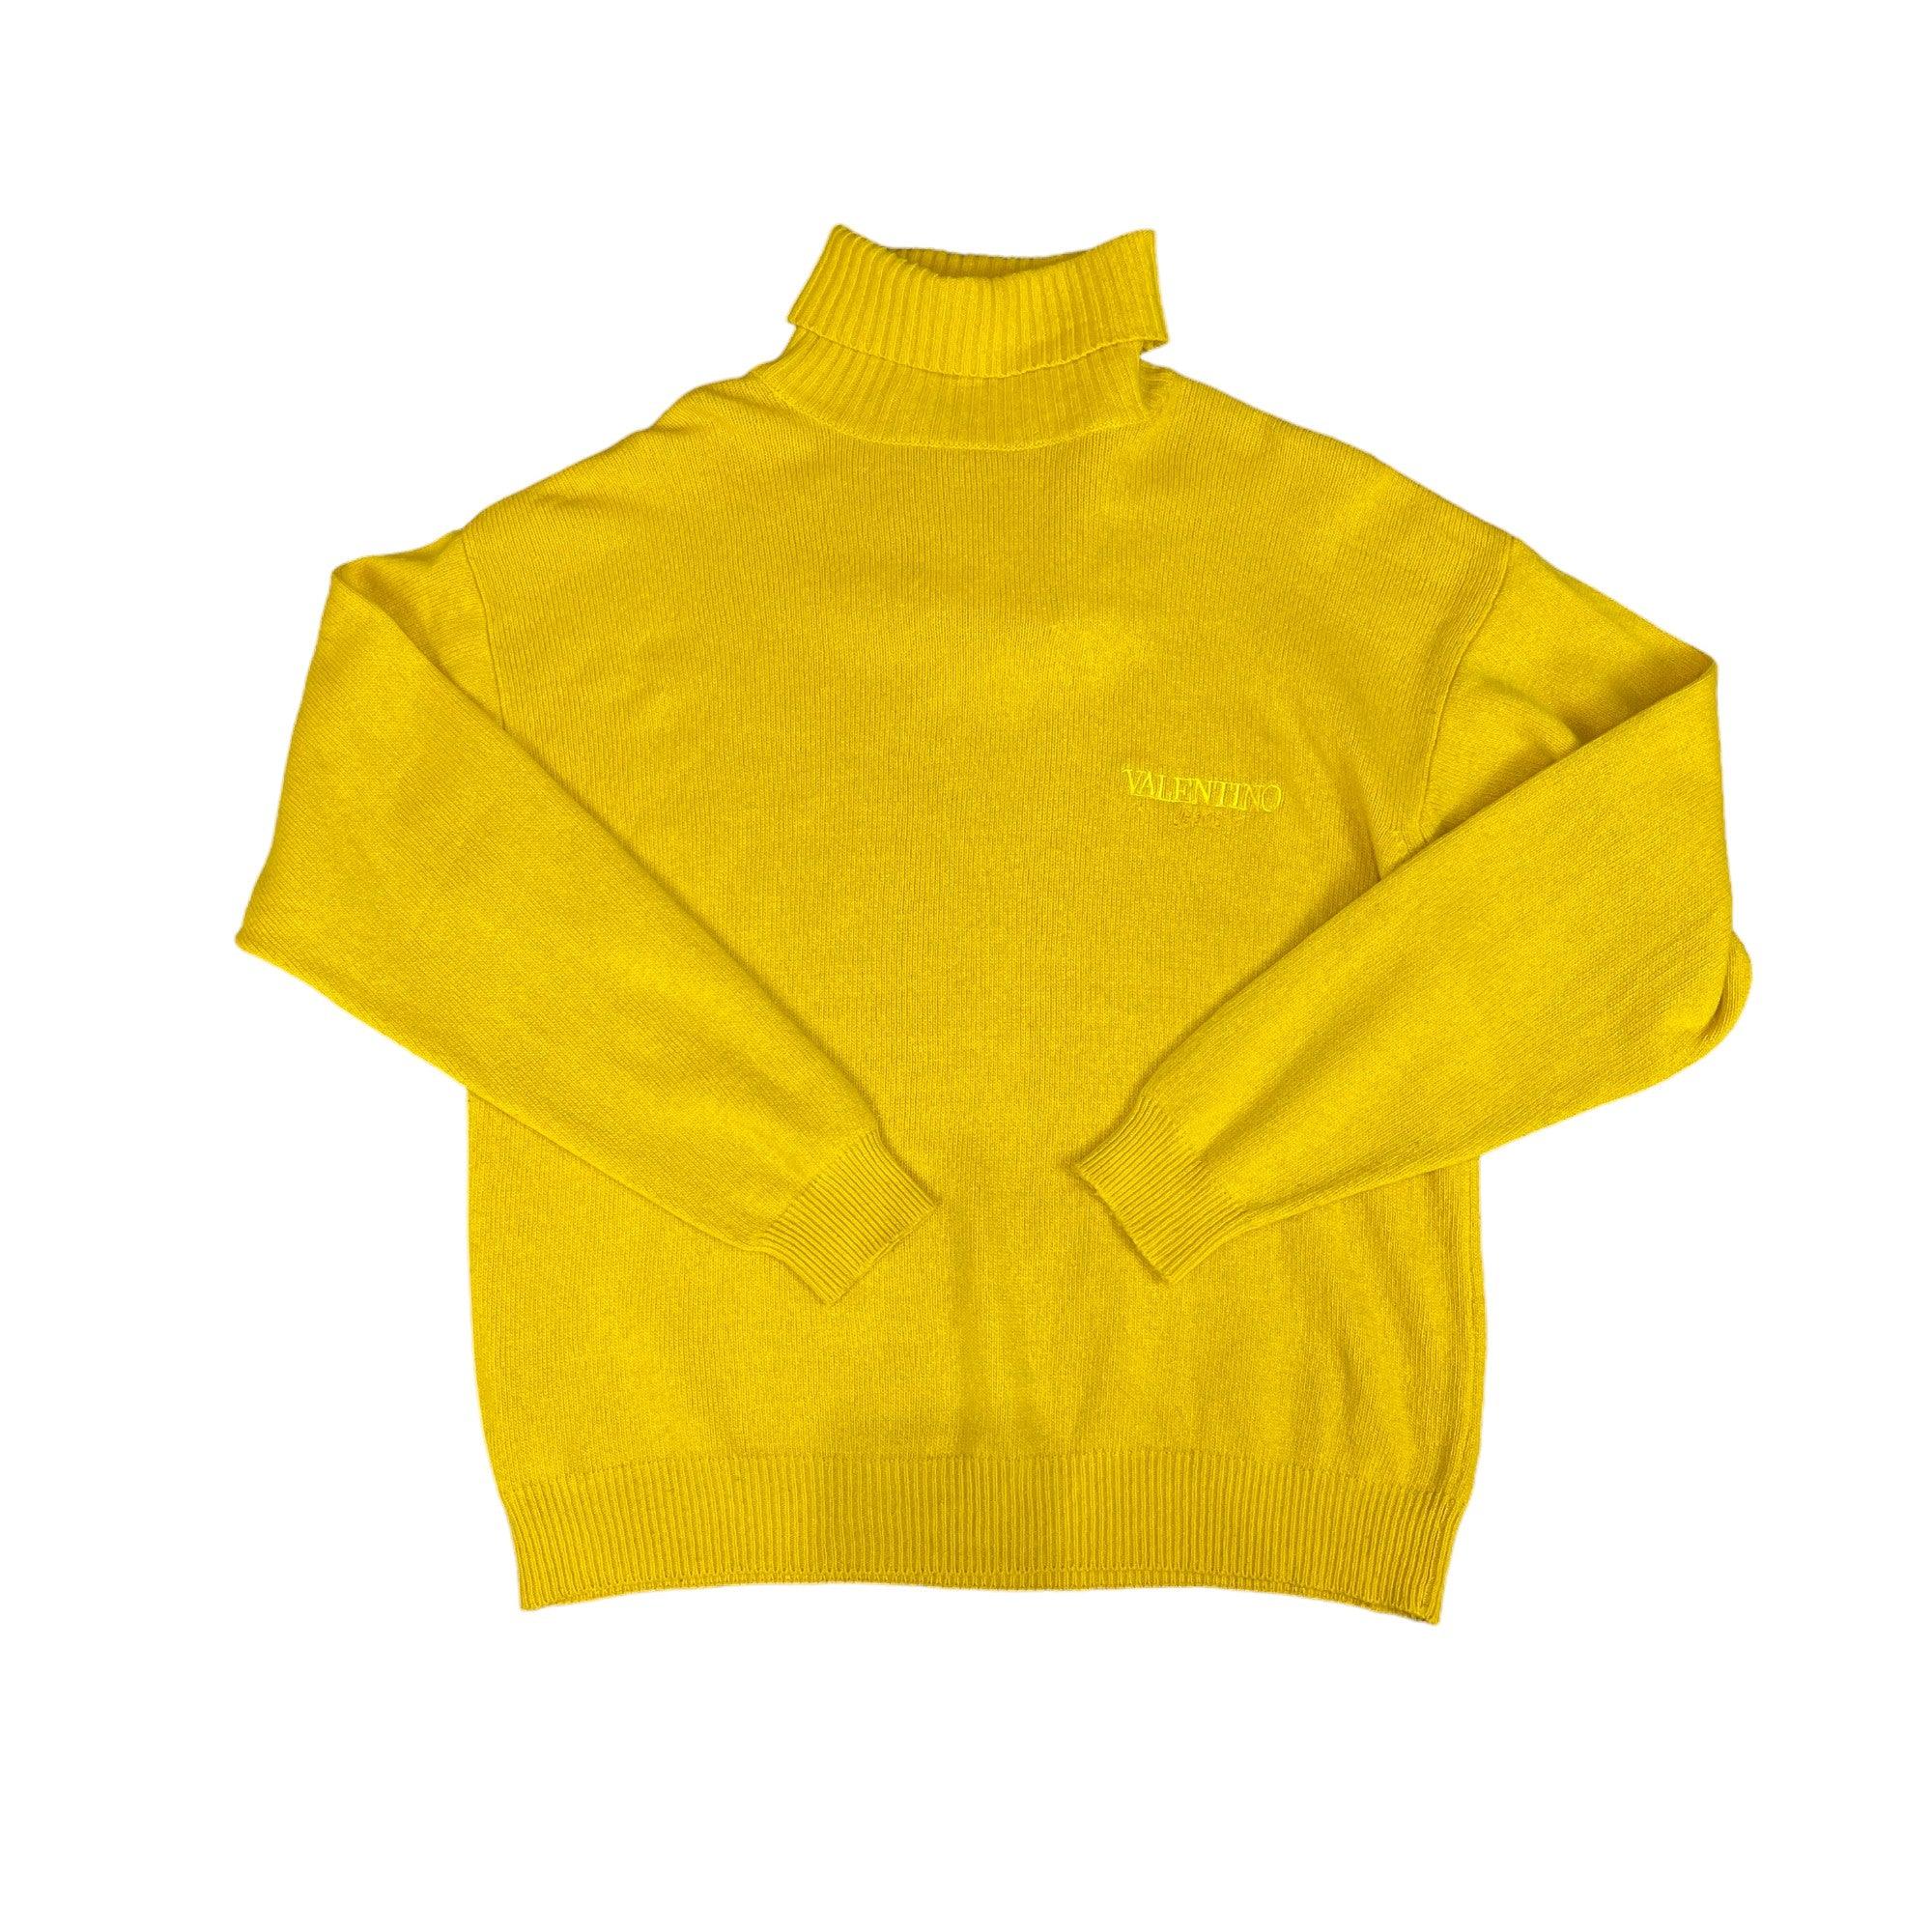 Vintage 90s Yellow Valentino Knitted Sweatshirt - Large - The Streetwear Studio